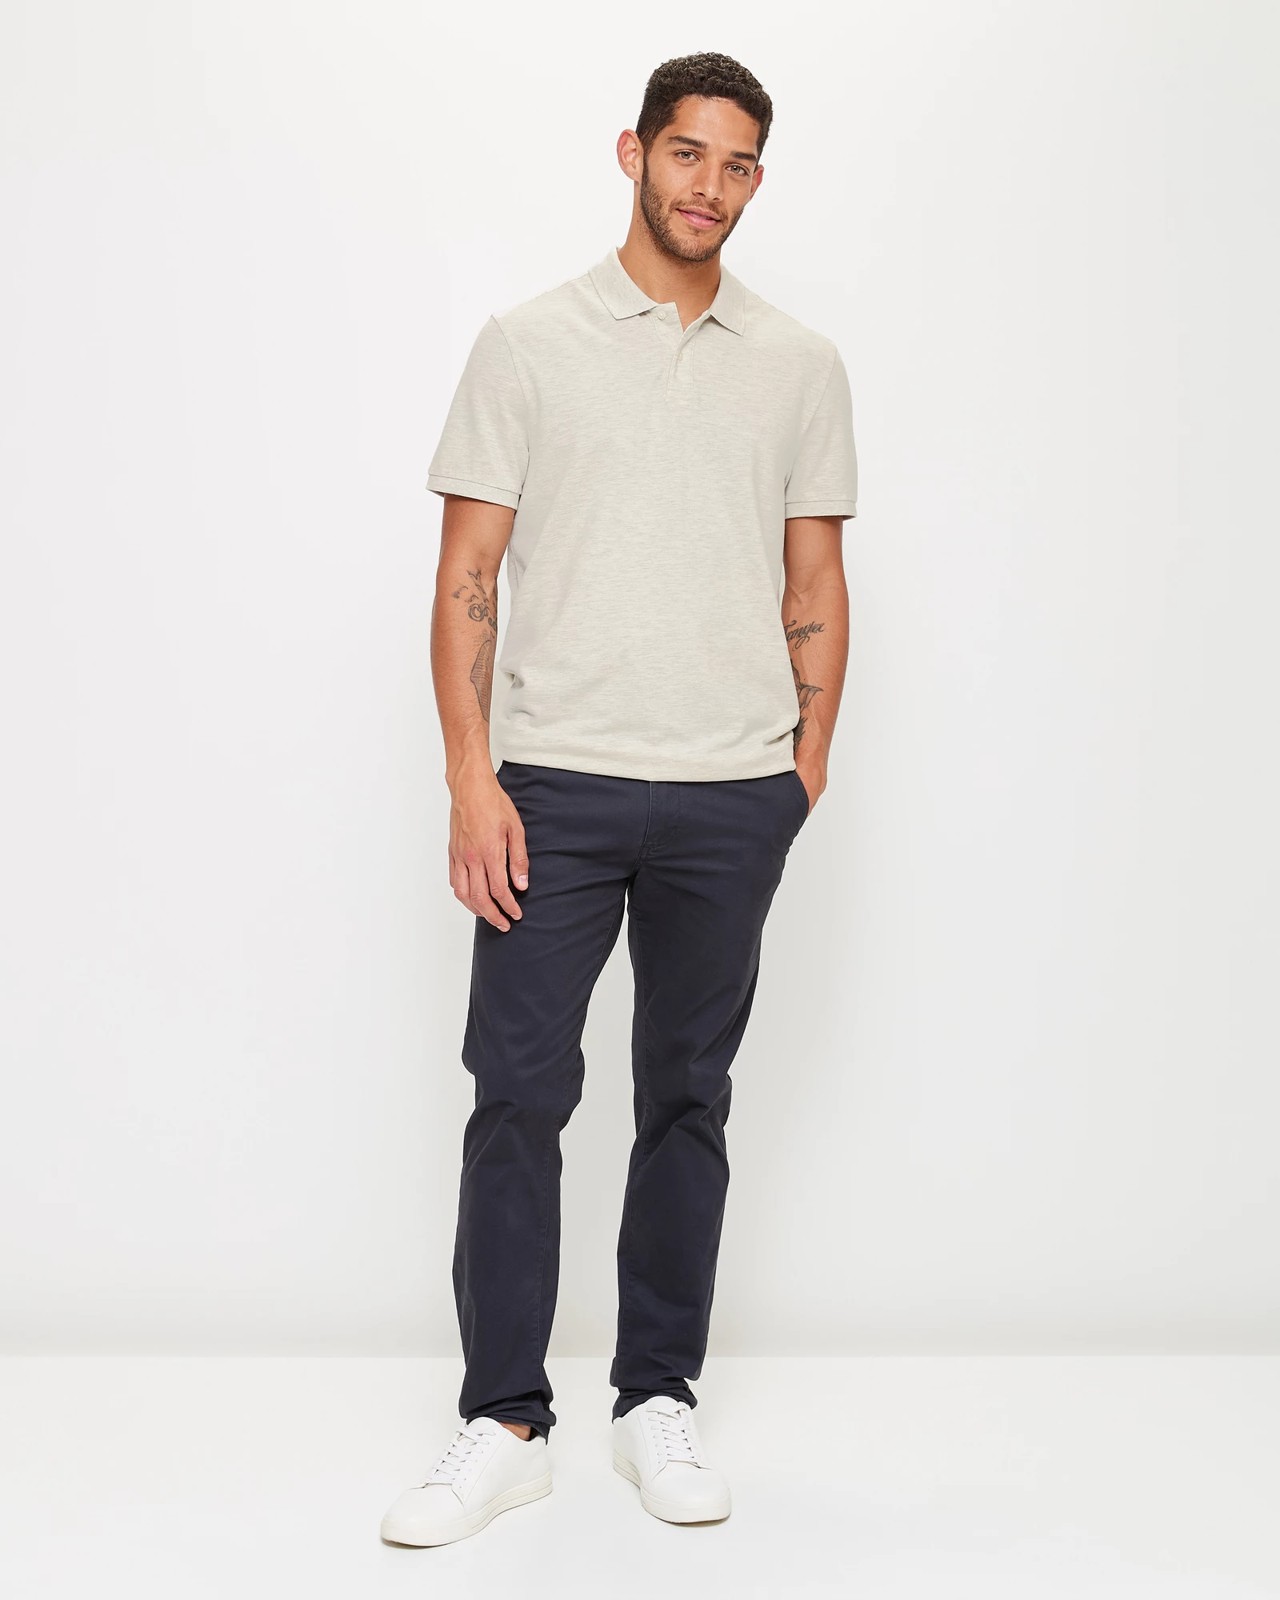 Short Sleeve Pique Polo Shirt | Target Australia